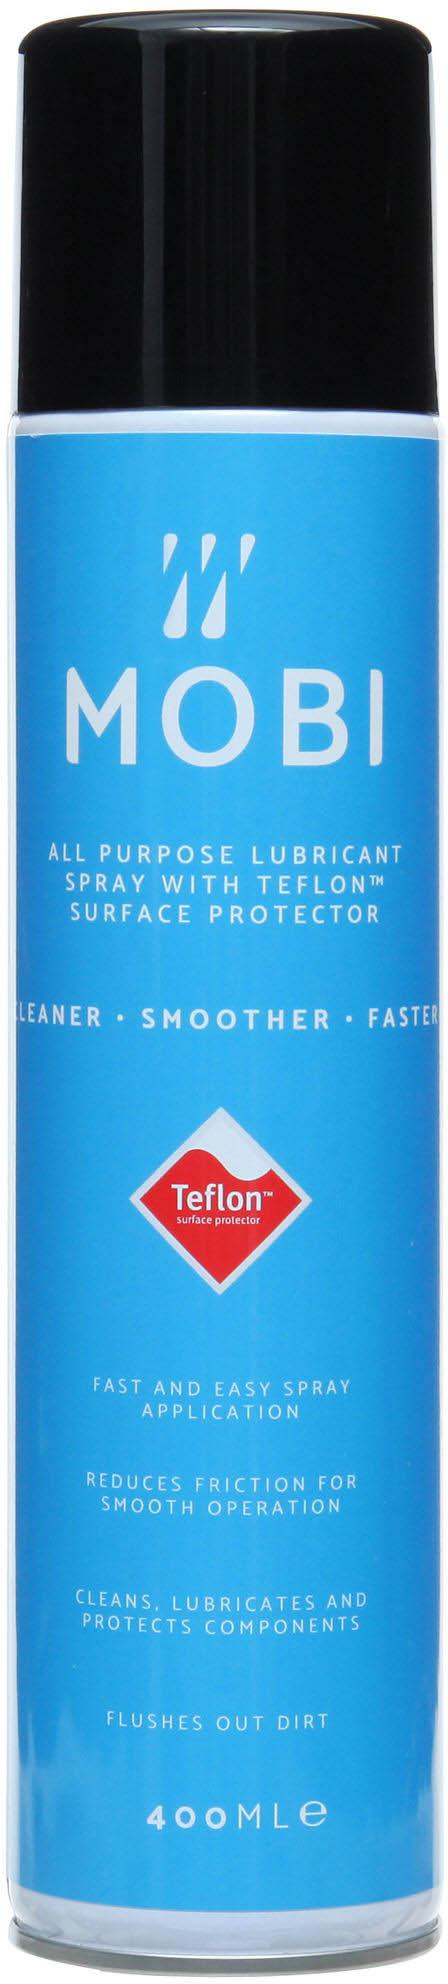 Mobi All Weather Lubricant Spray With Teflon Aerosol - Neutral